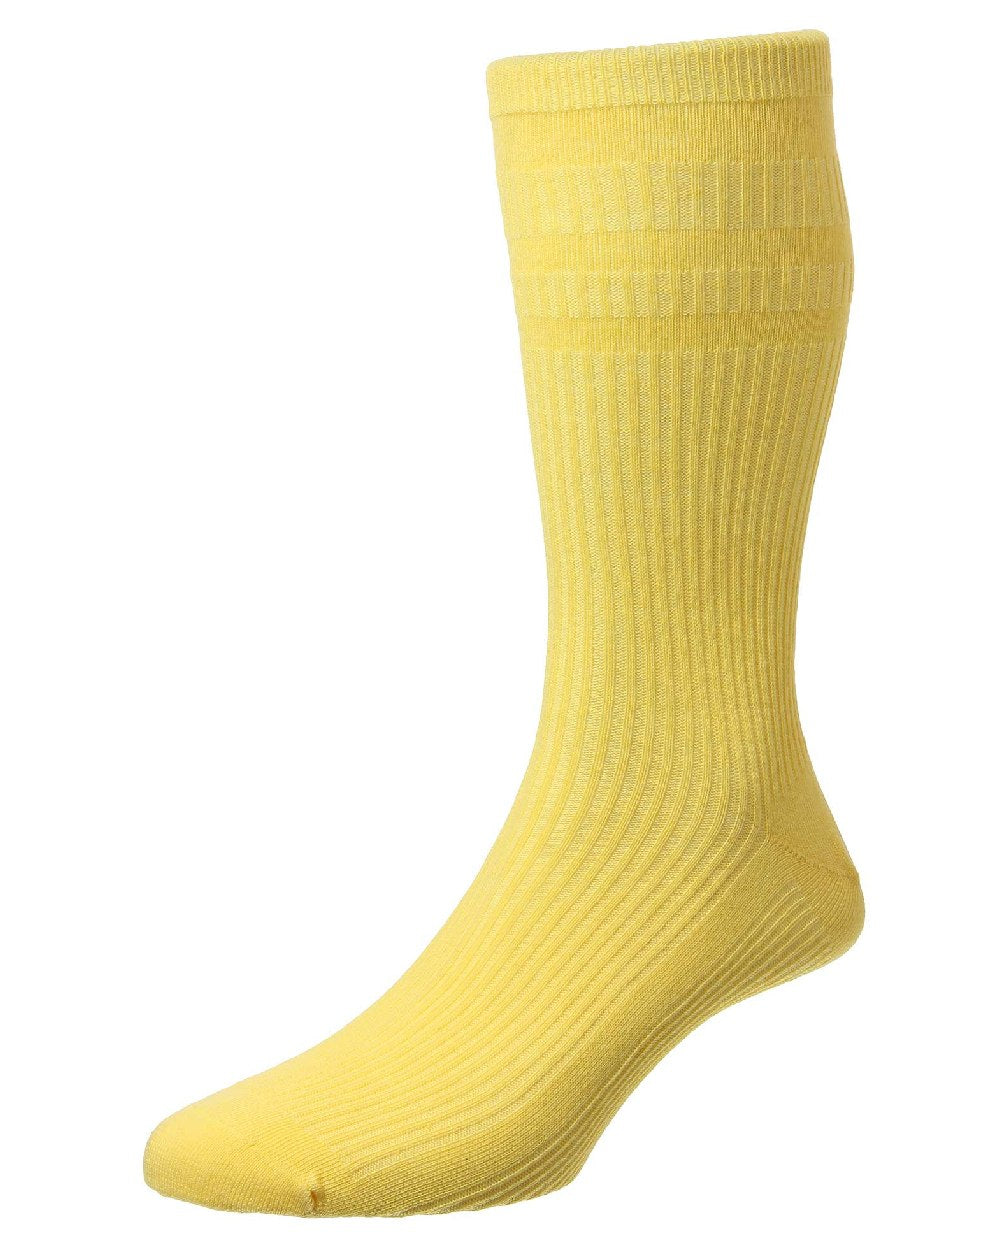 HJ Hall Original Cotton Soft Top Socks in Maize 